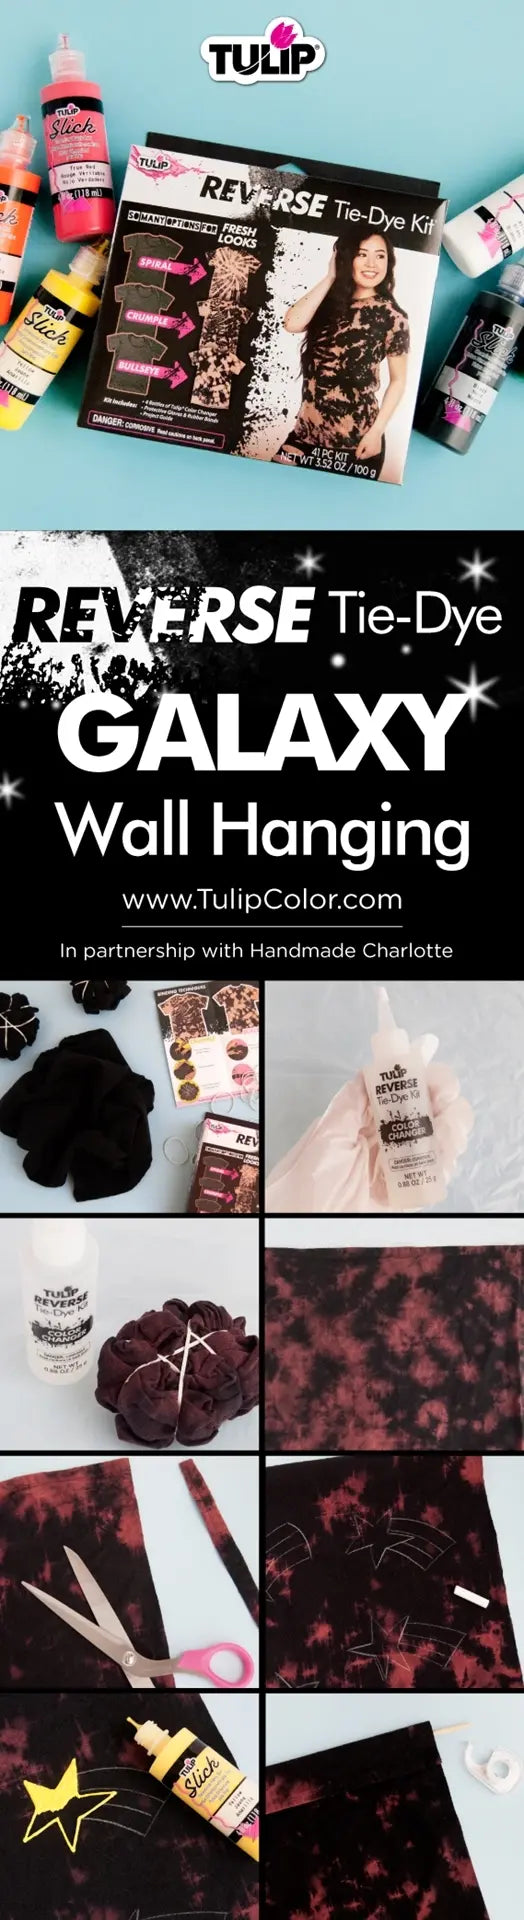 Tulip Reverse Tie-Dye Galaxy Wall Hanging